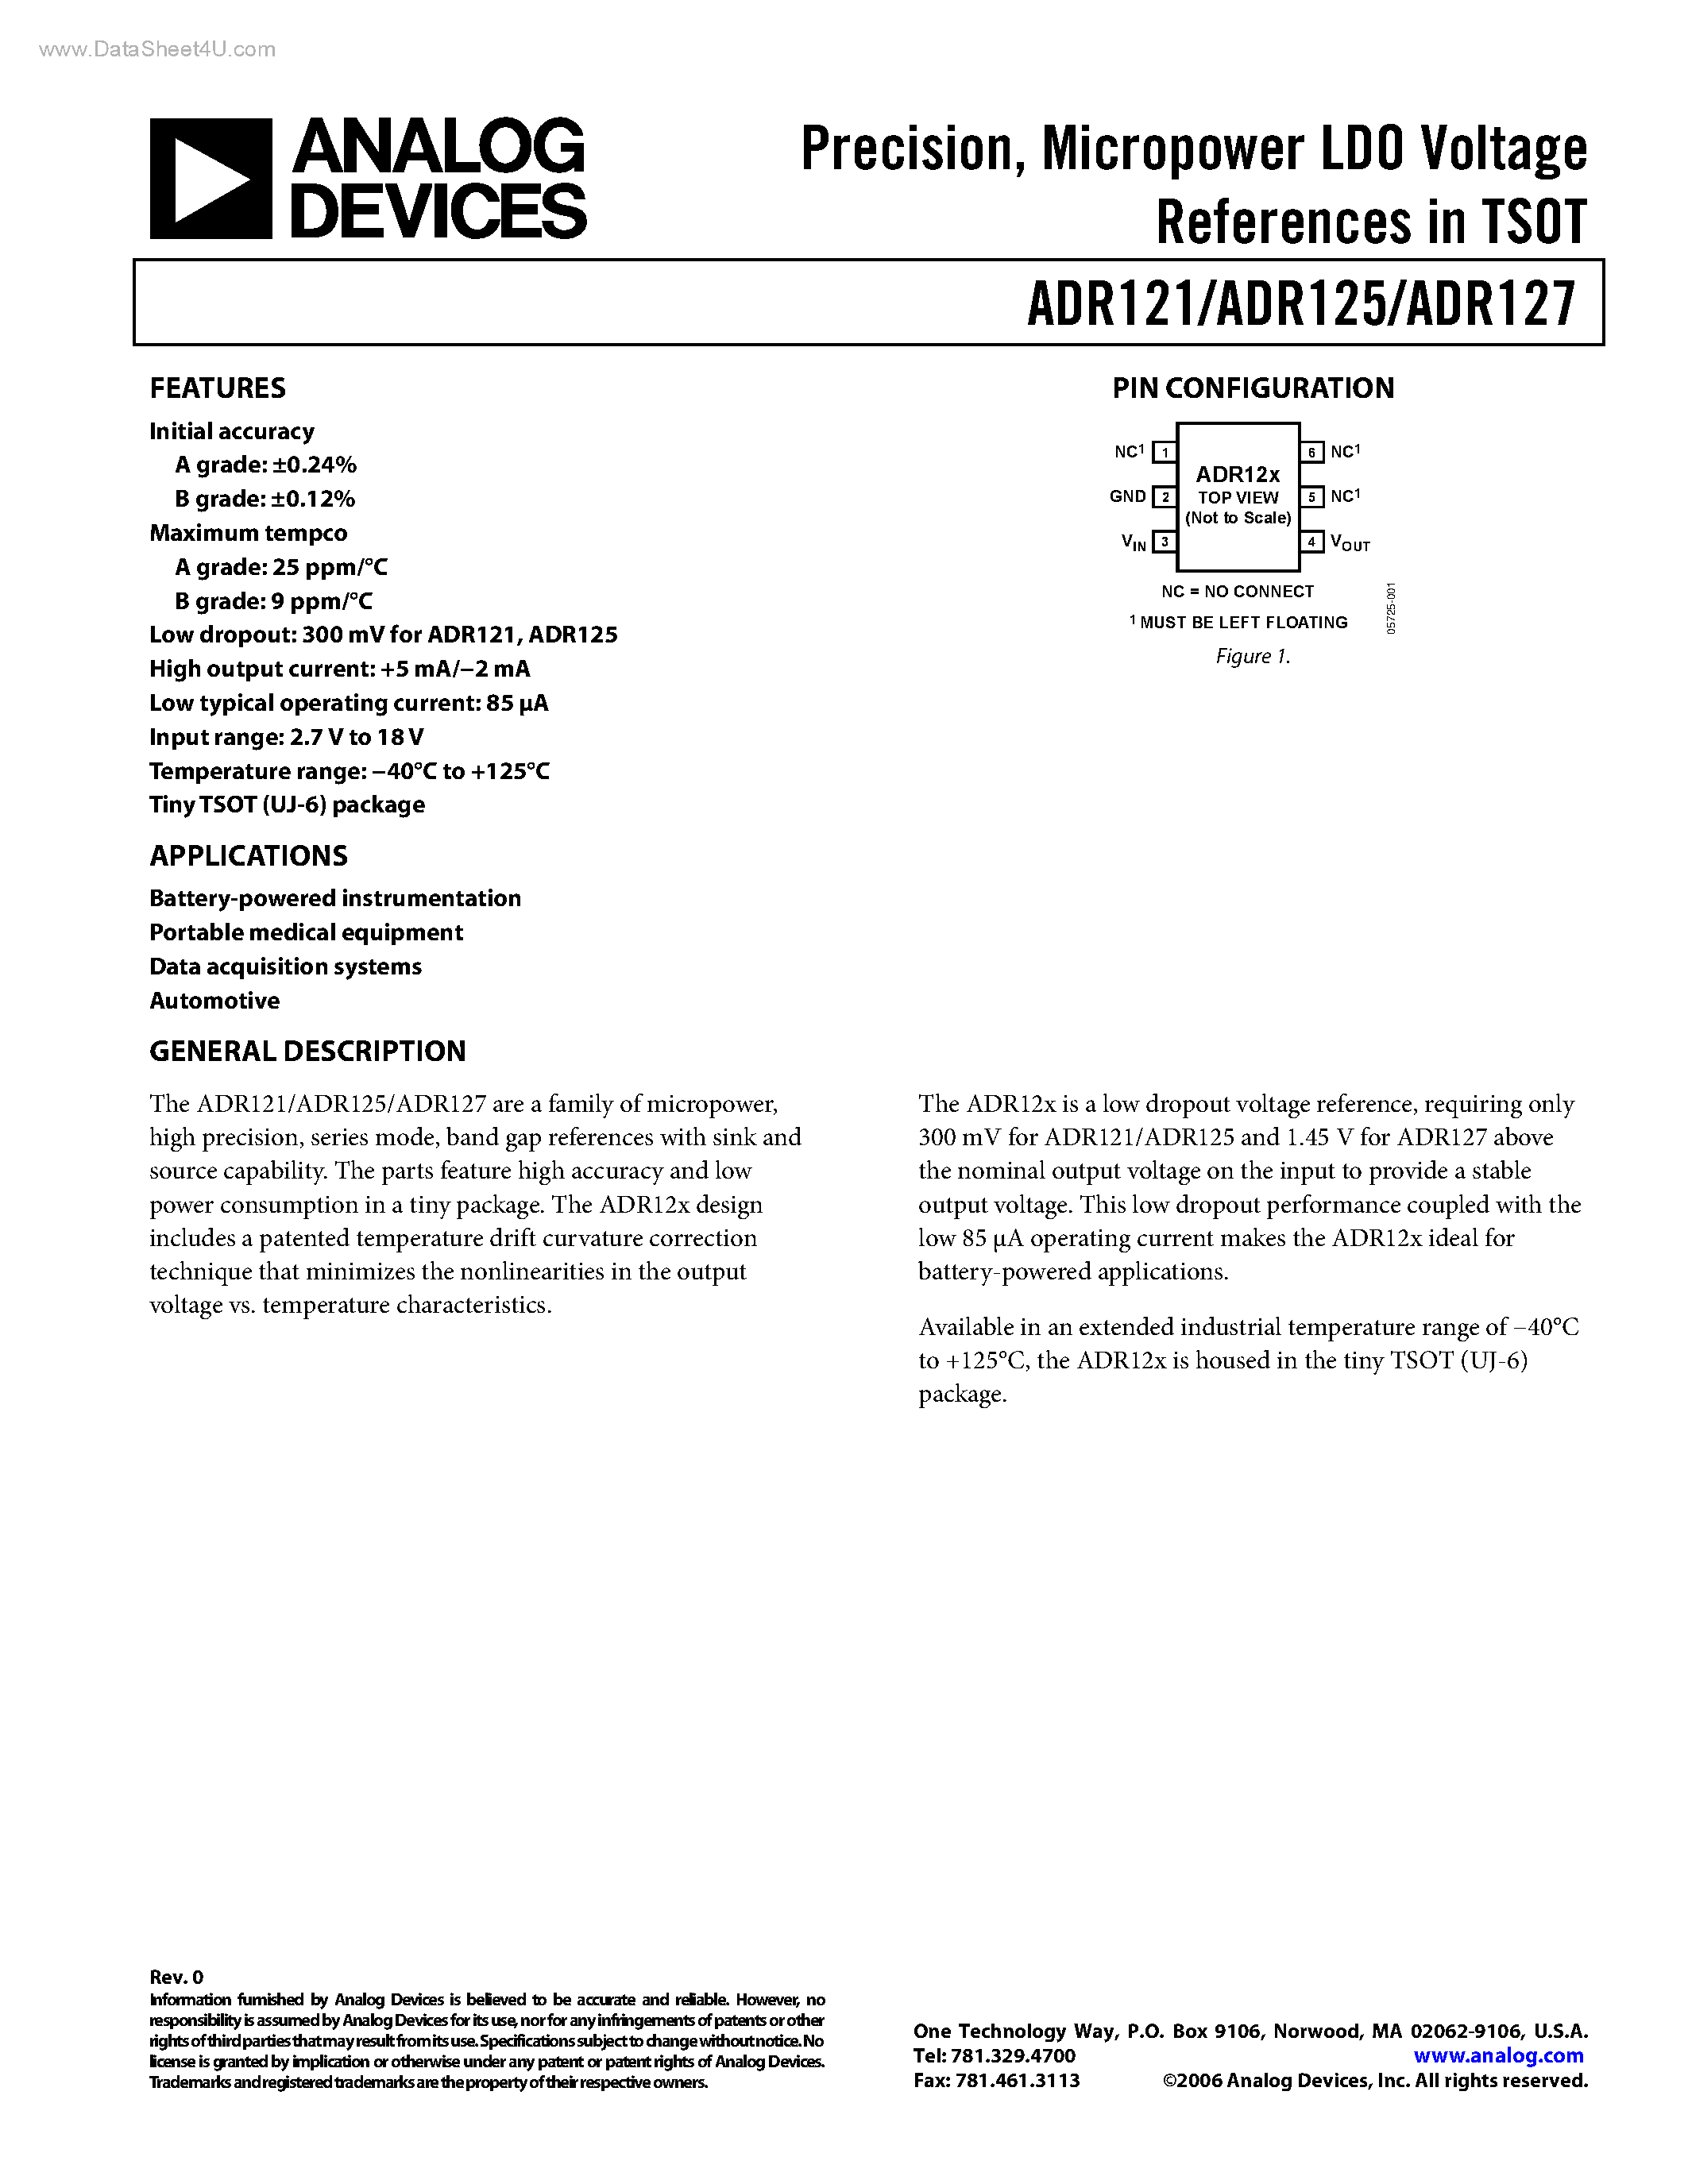 Даташит ADR121-(ADR121 - ADR127) Micropower LDO Voltage References страница 1